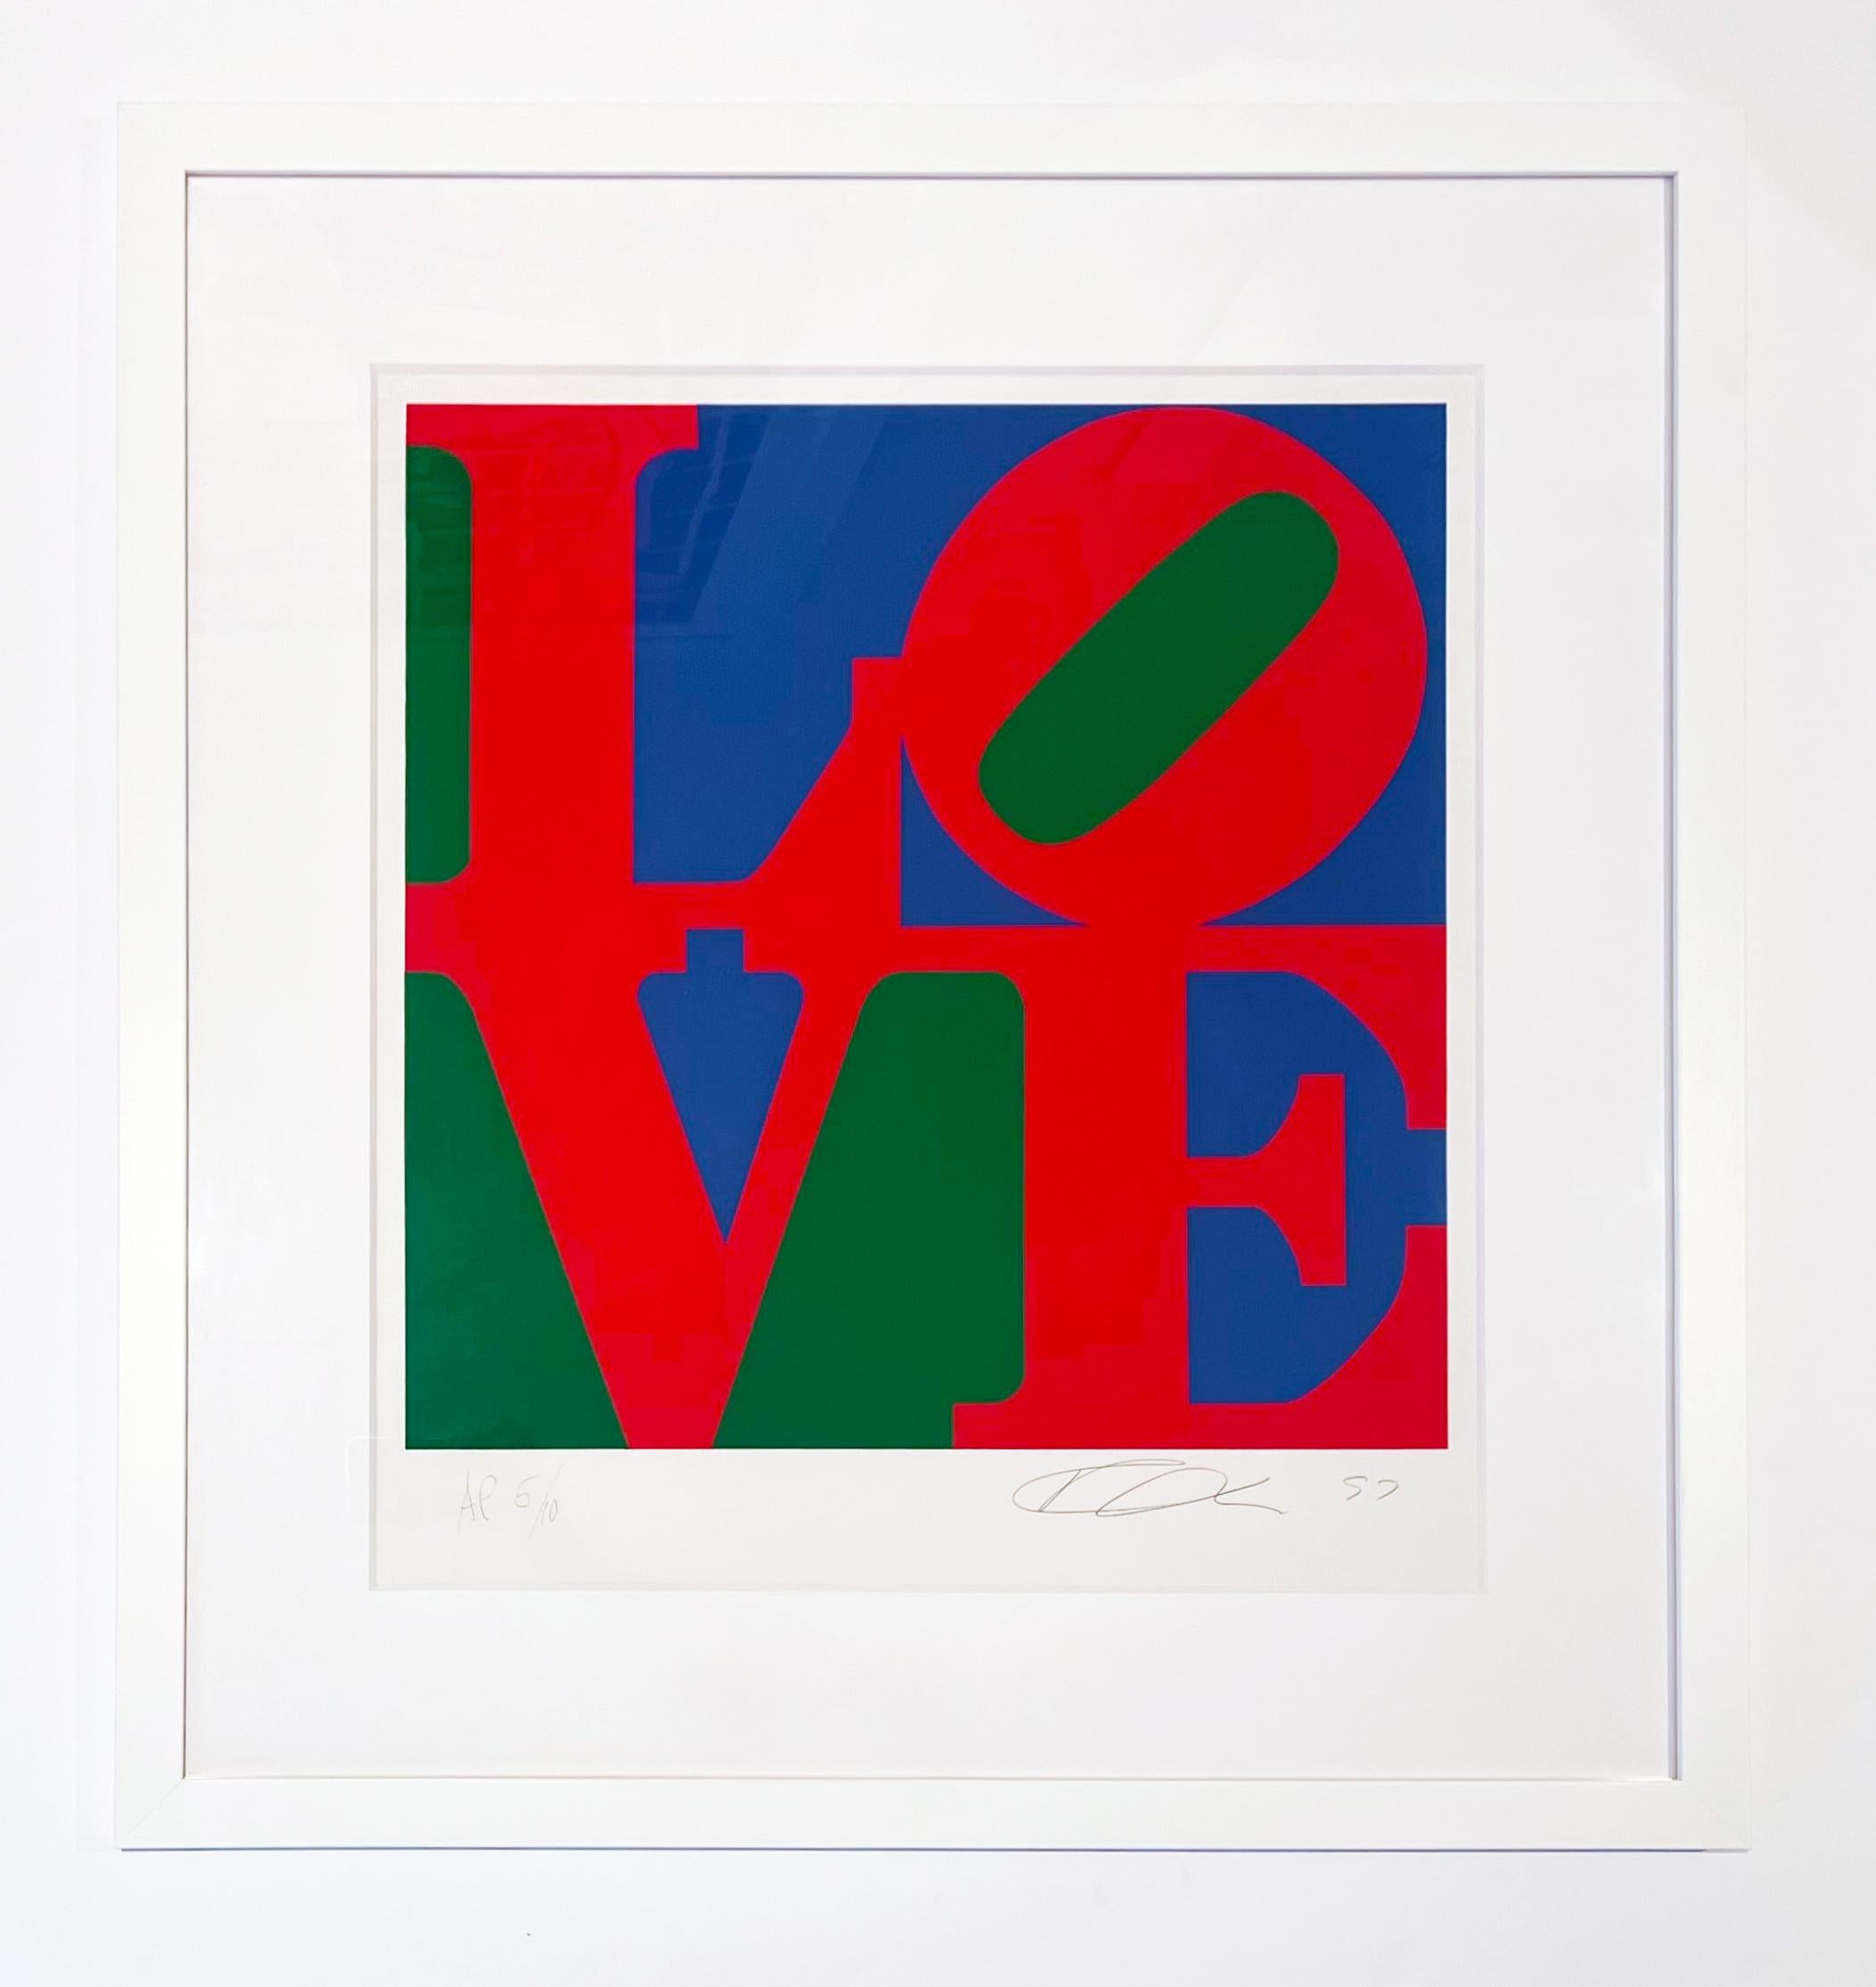 Love - Print by Robert Indiana